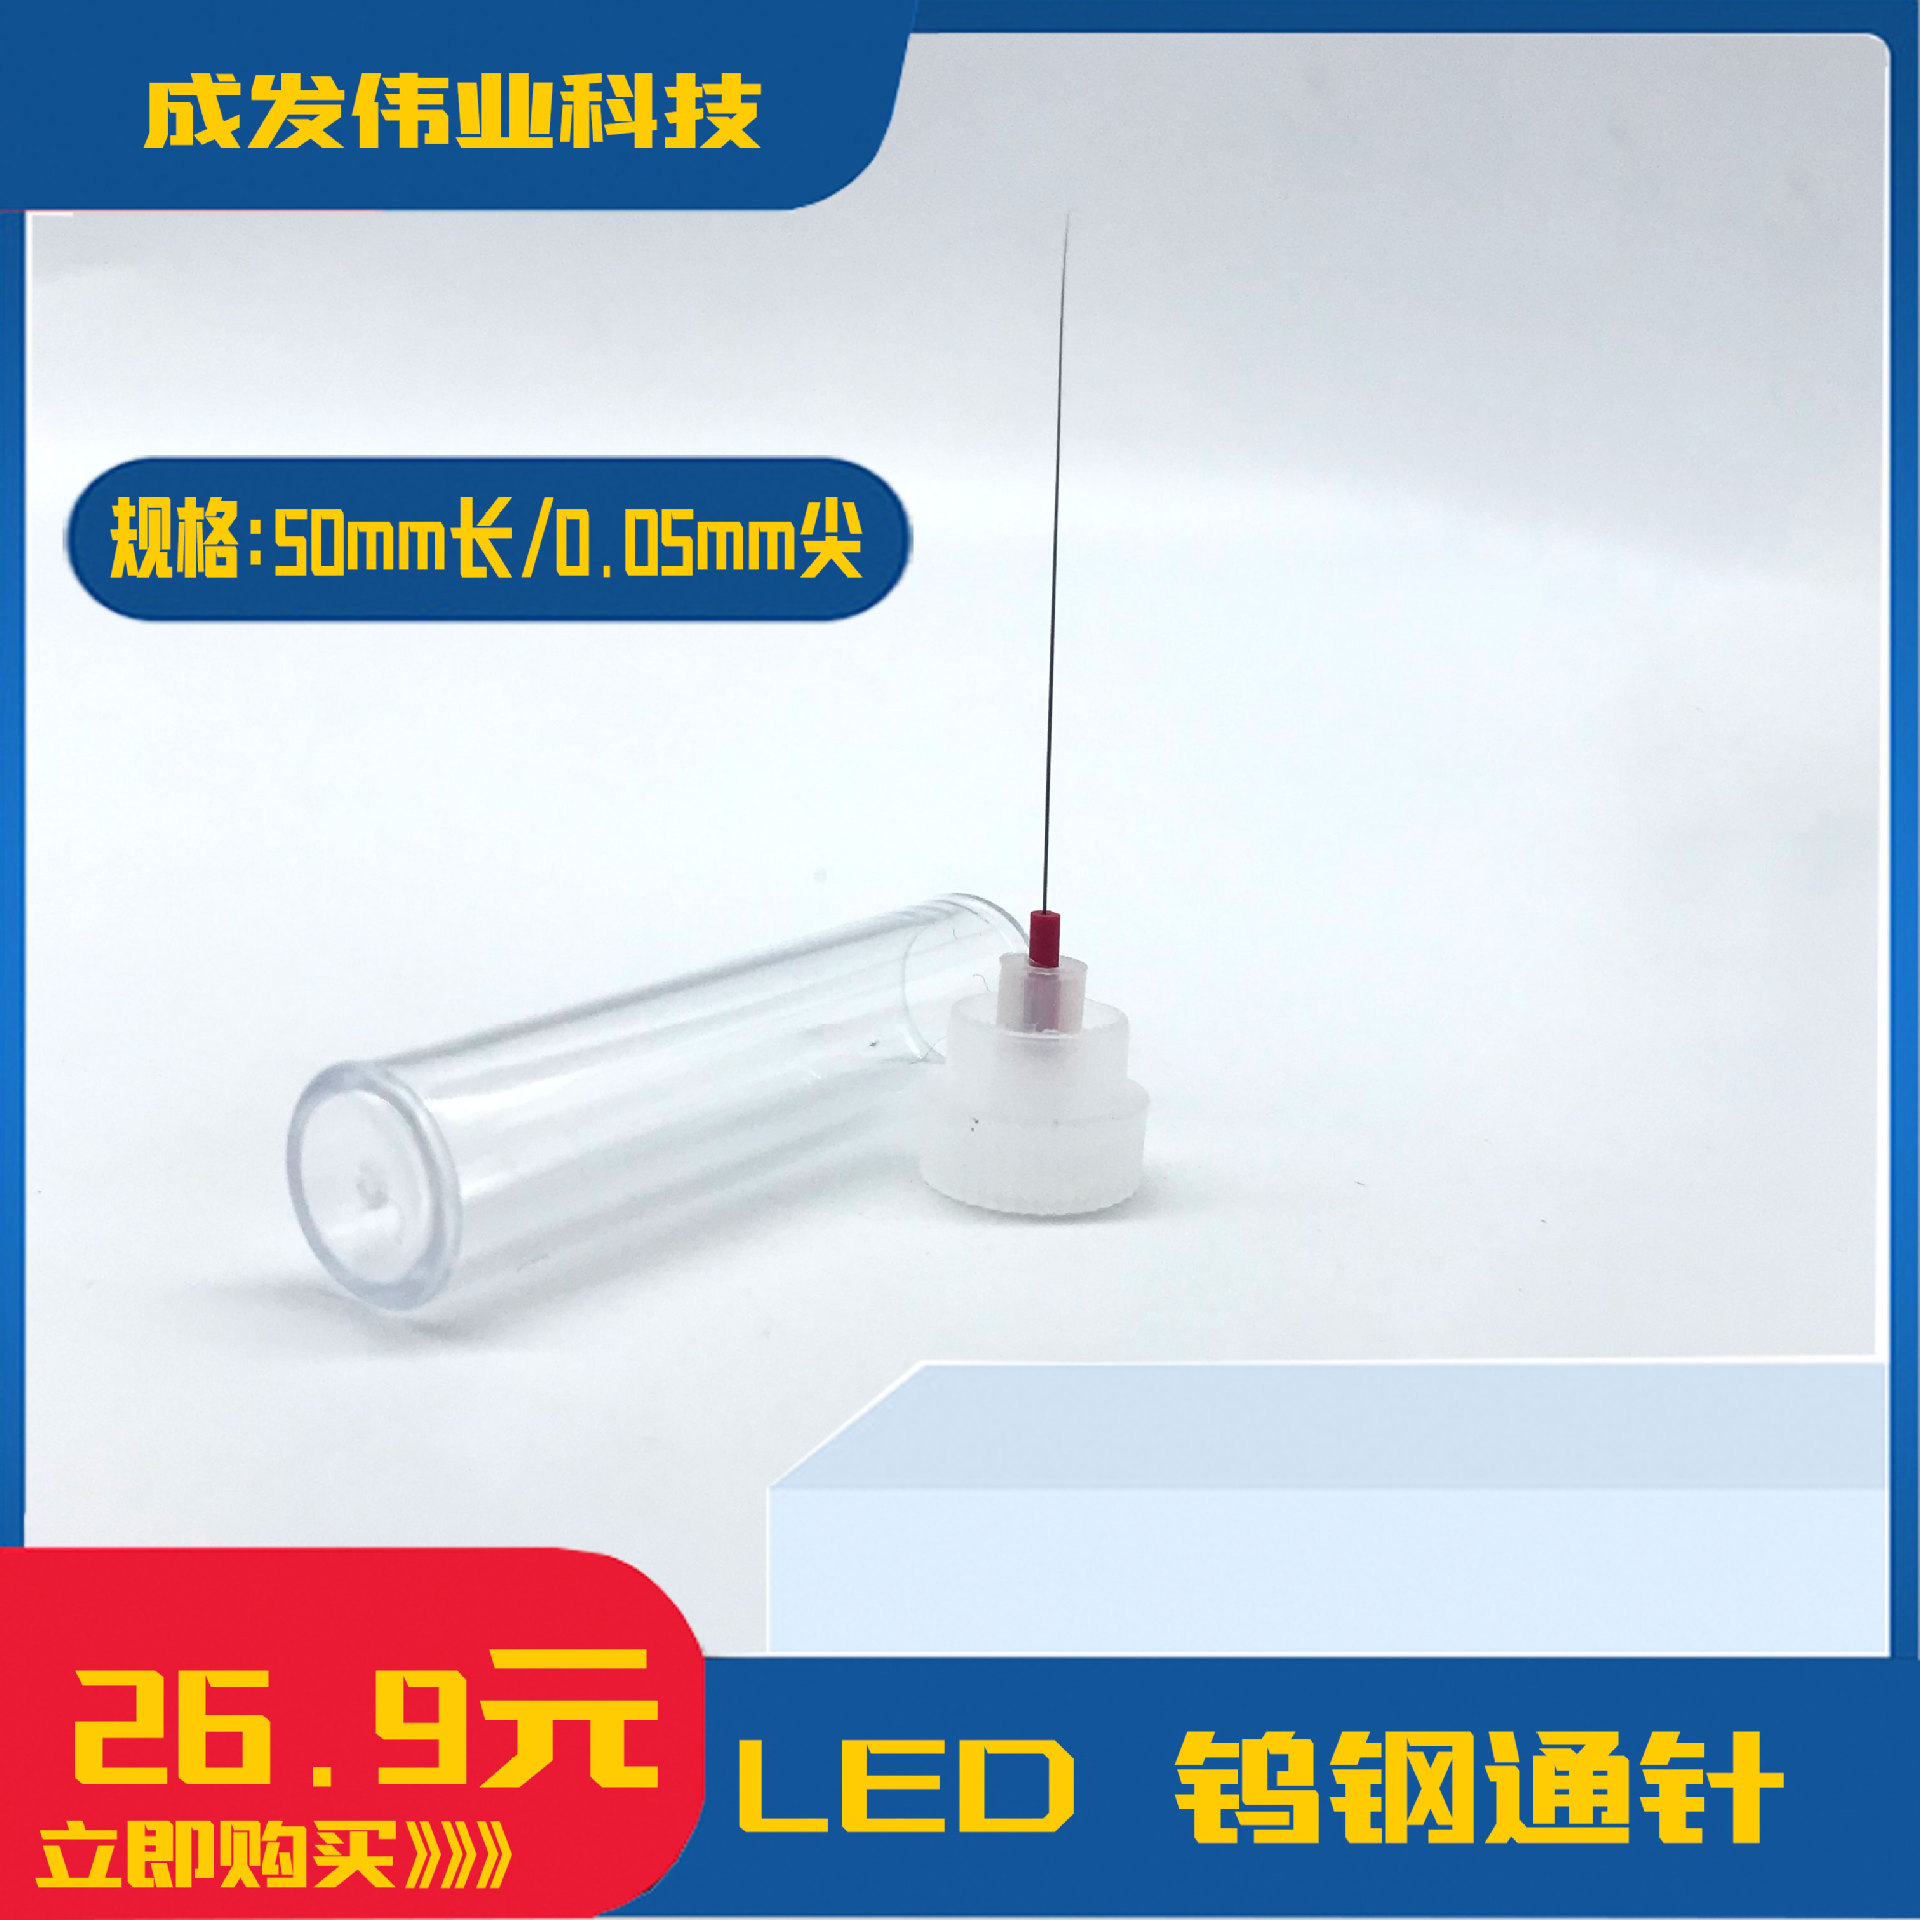 LED喷嘴通针可通劈刀0.05mm细钨钢捅针通瓷嘴 通固晶机吸嘴点胶机